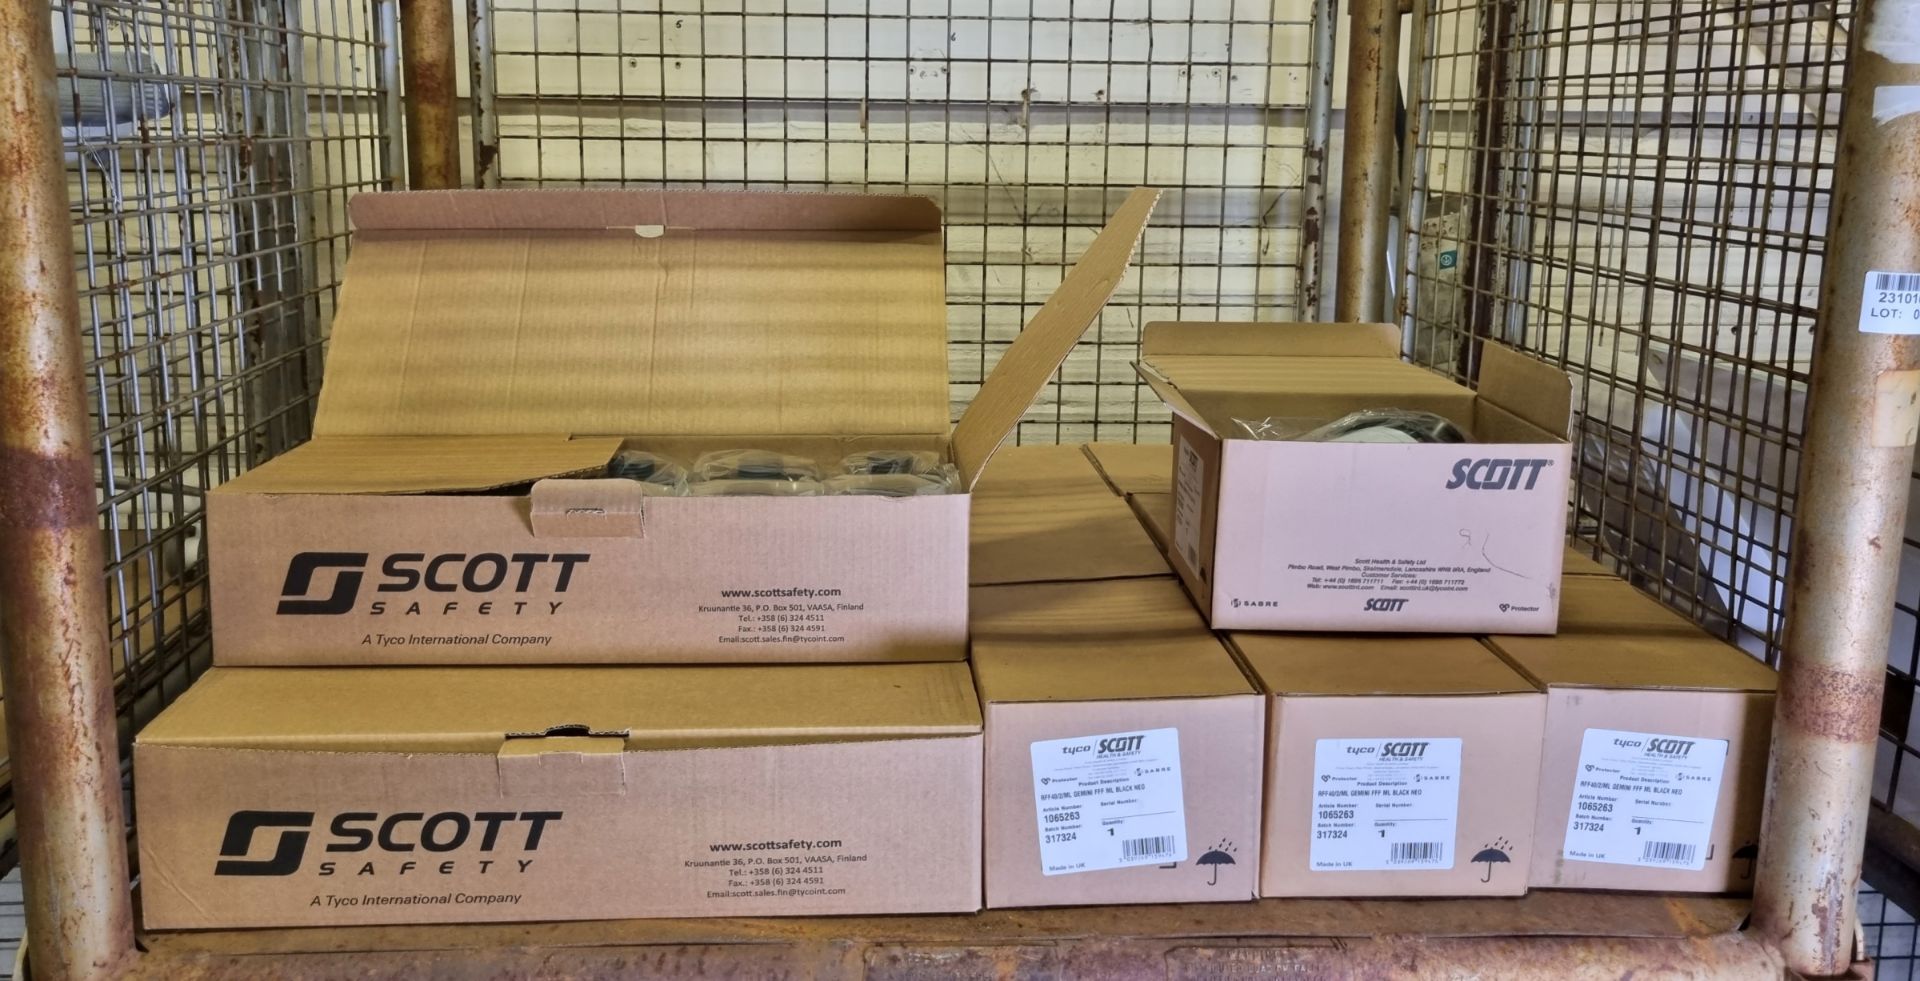 9x boxes of Scott RFF/40/2/ML Gemini full face masks - black, 7x boxes of Scott Pro2000 PF 10